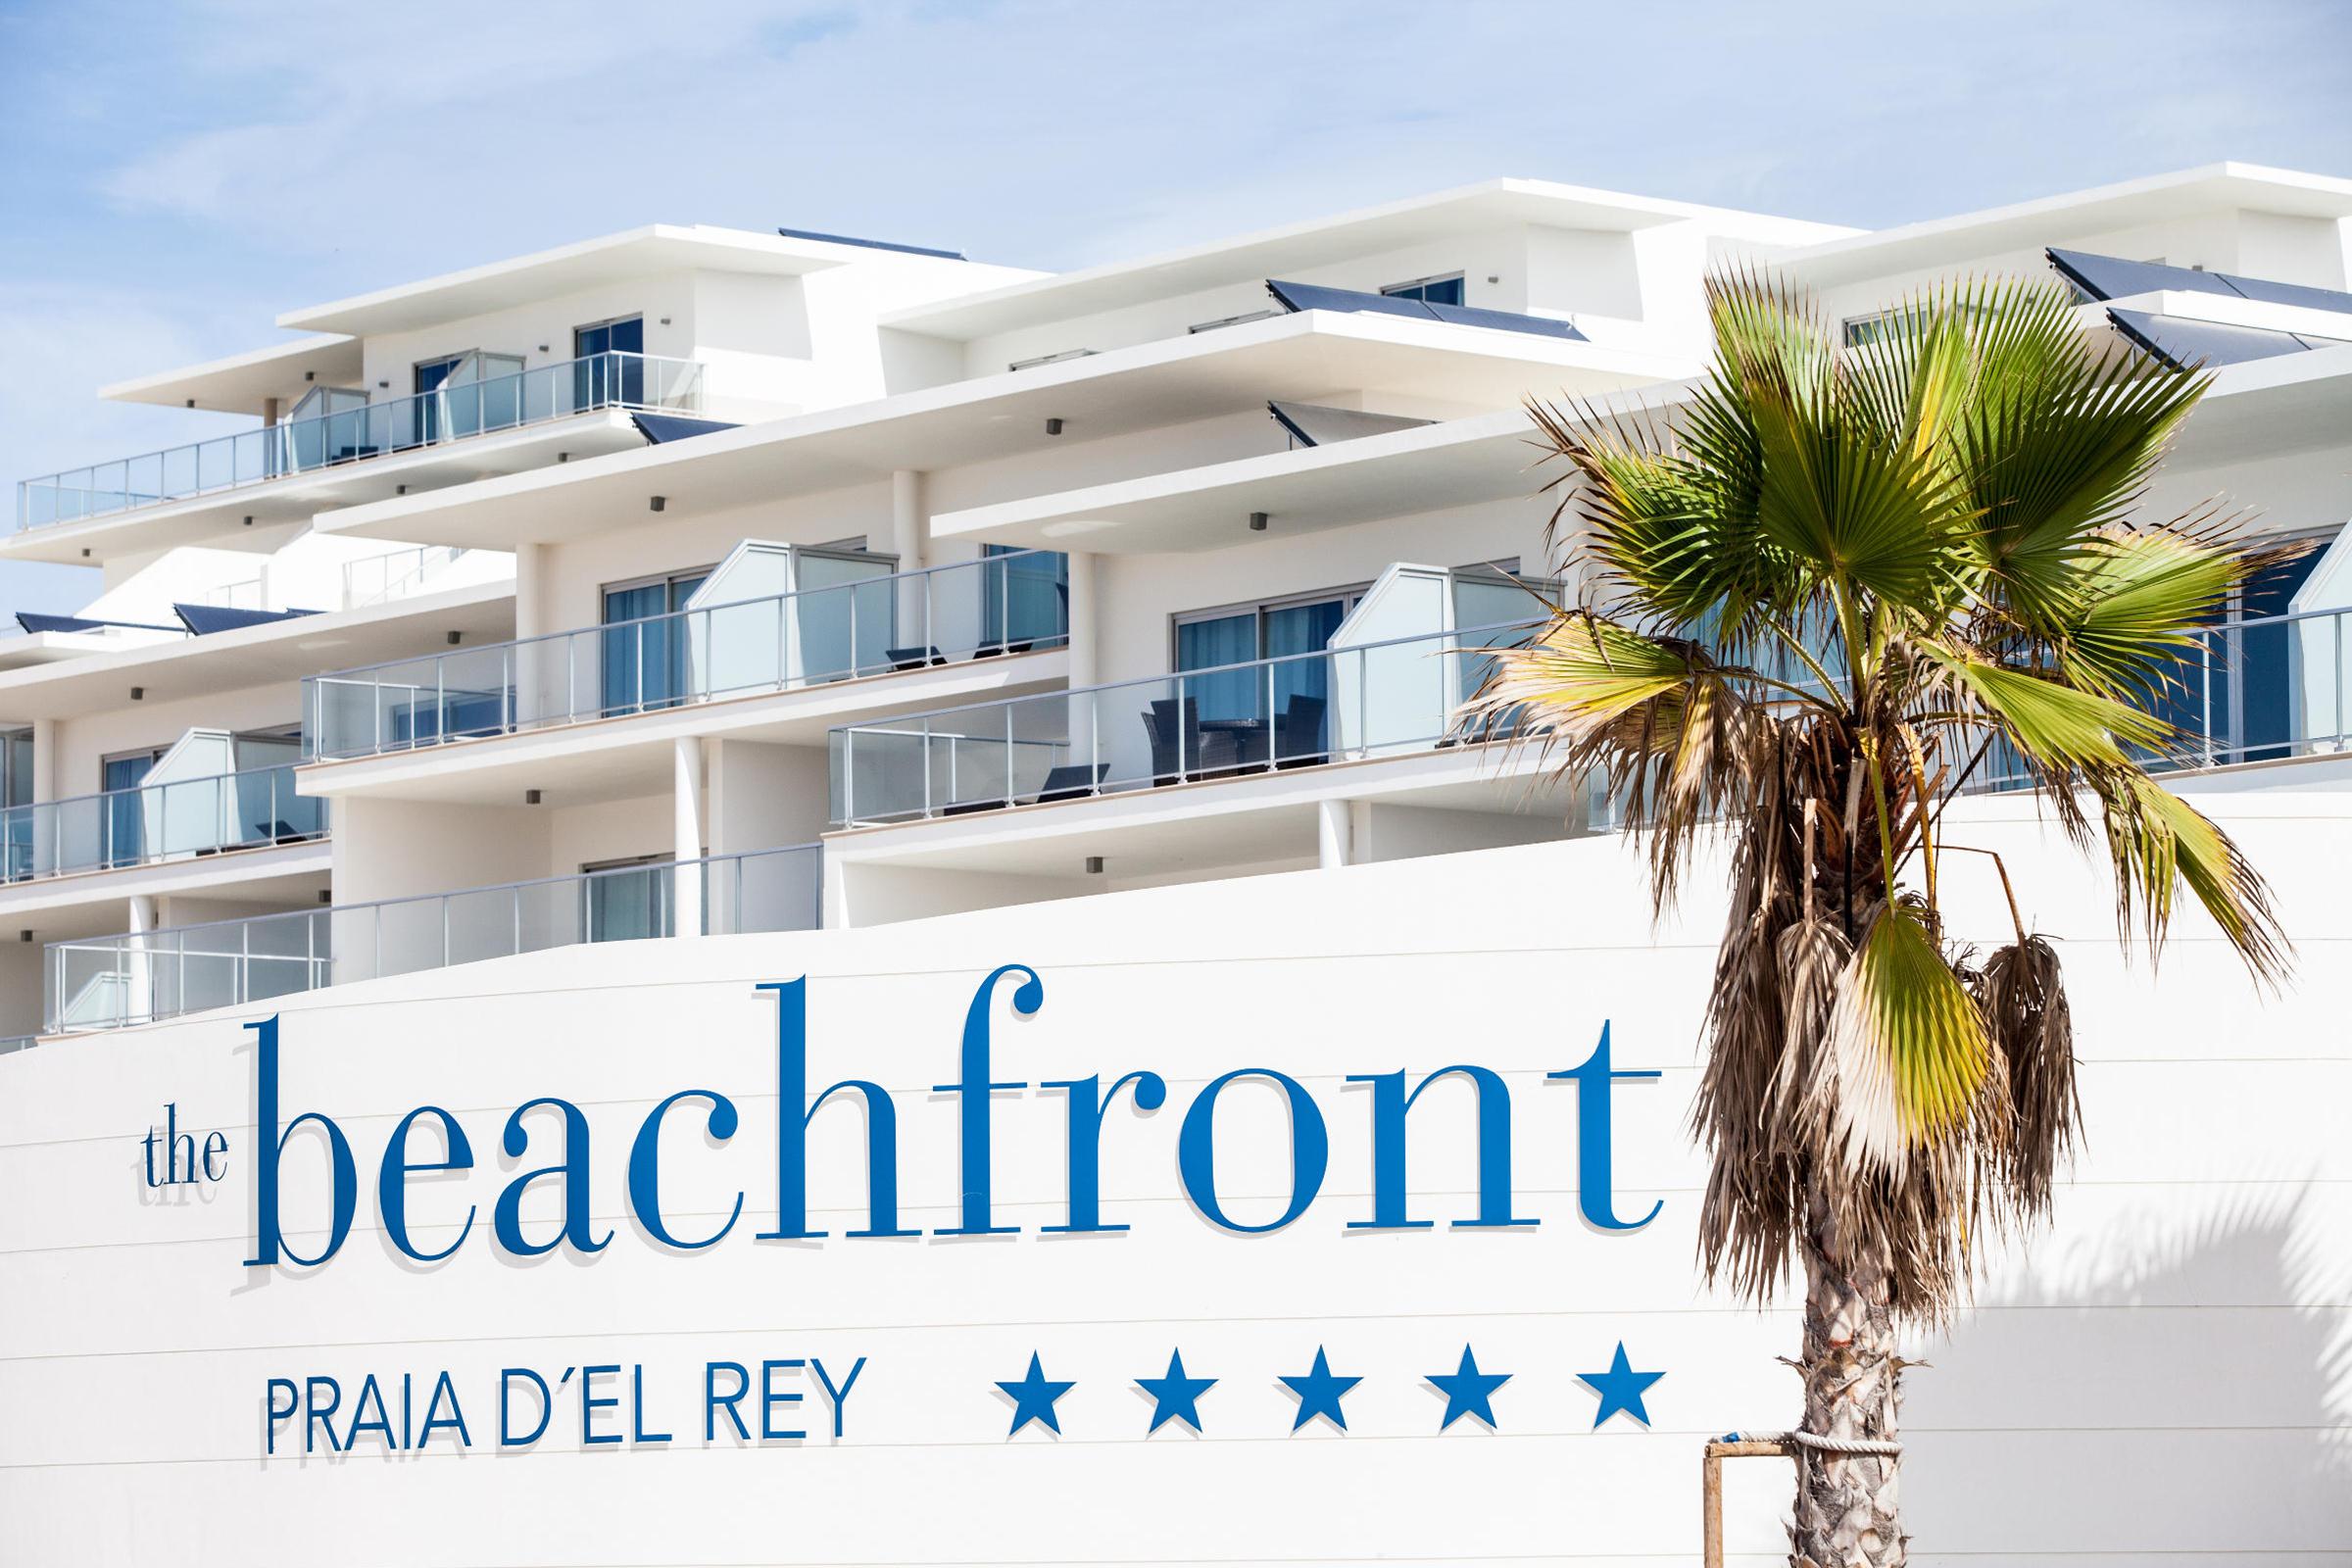 The Beachfront Praia del Rey